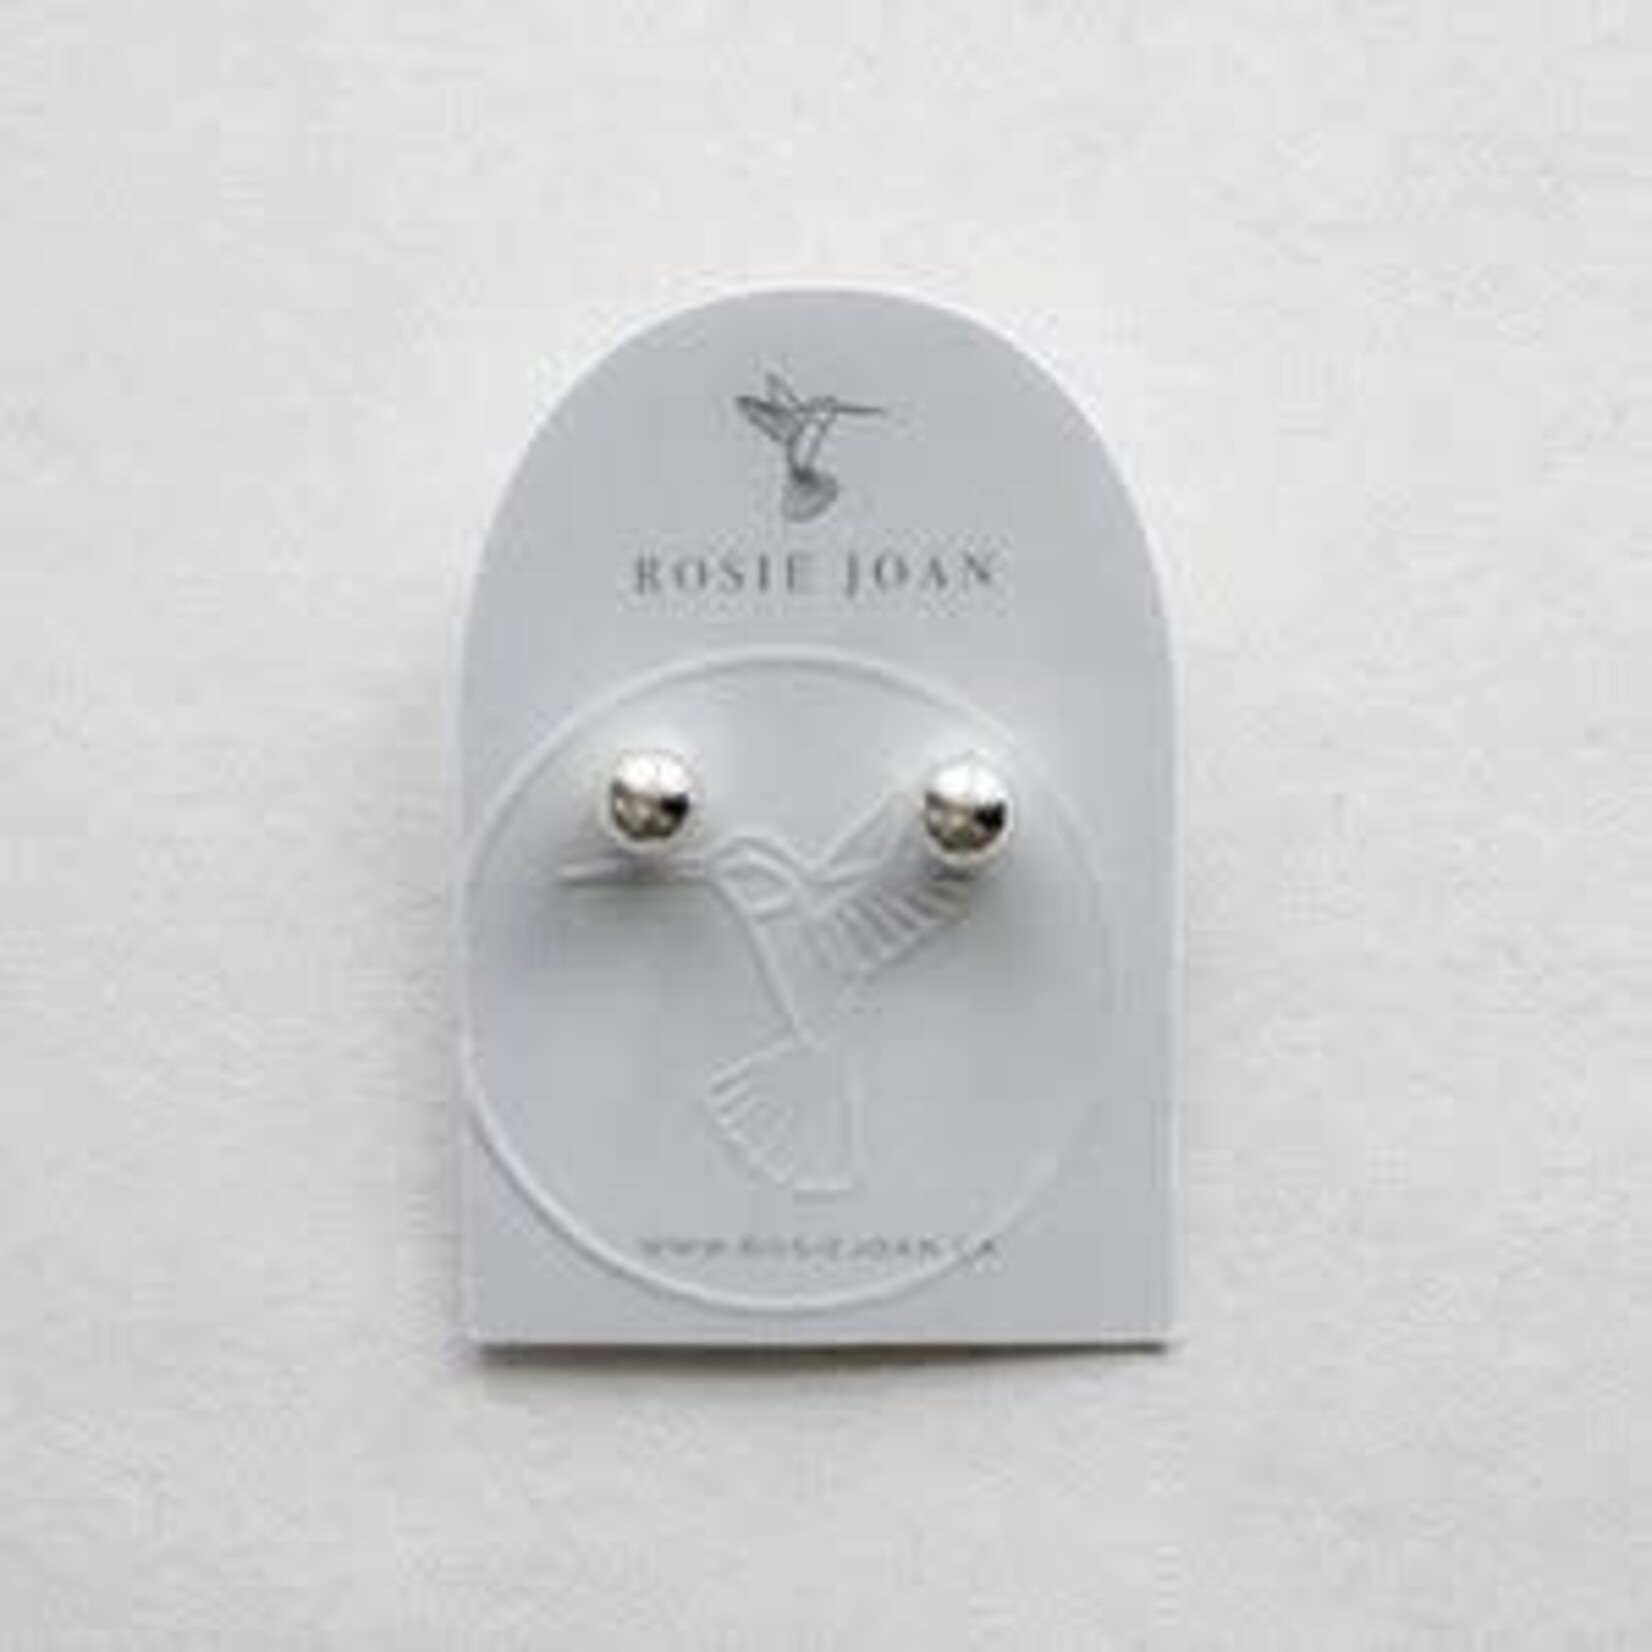 Rosie Joan Rosie Joan - 8mm Sterling Silver Earrings